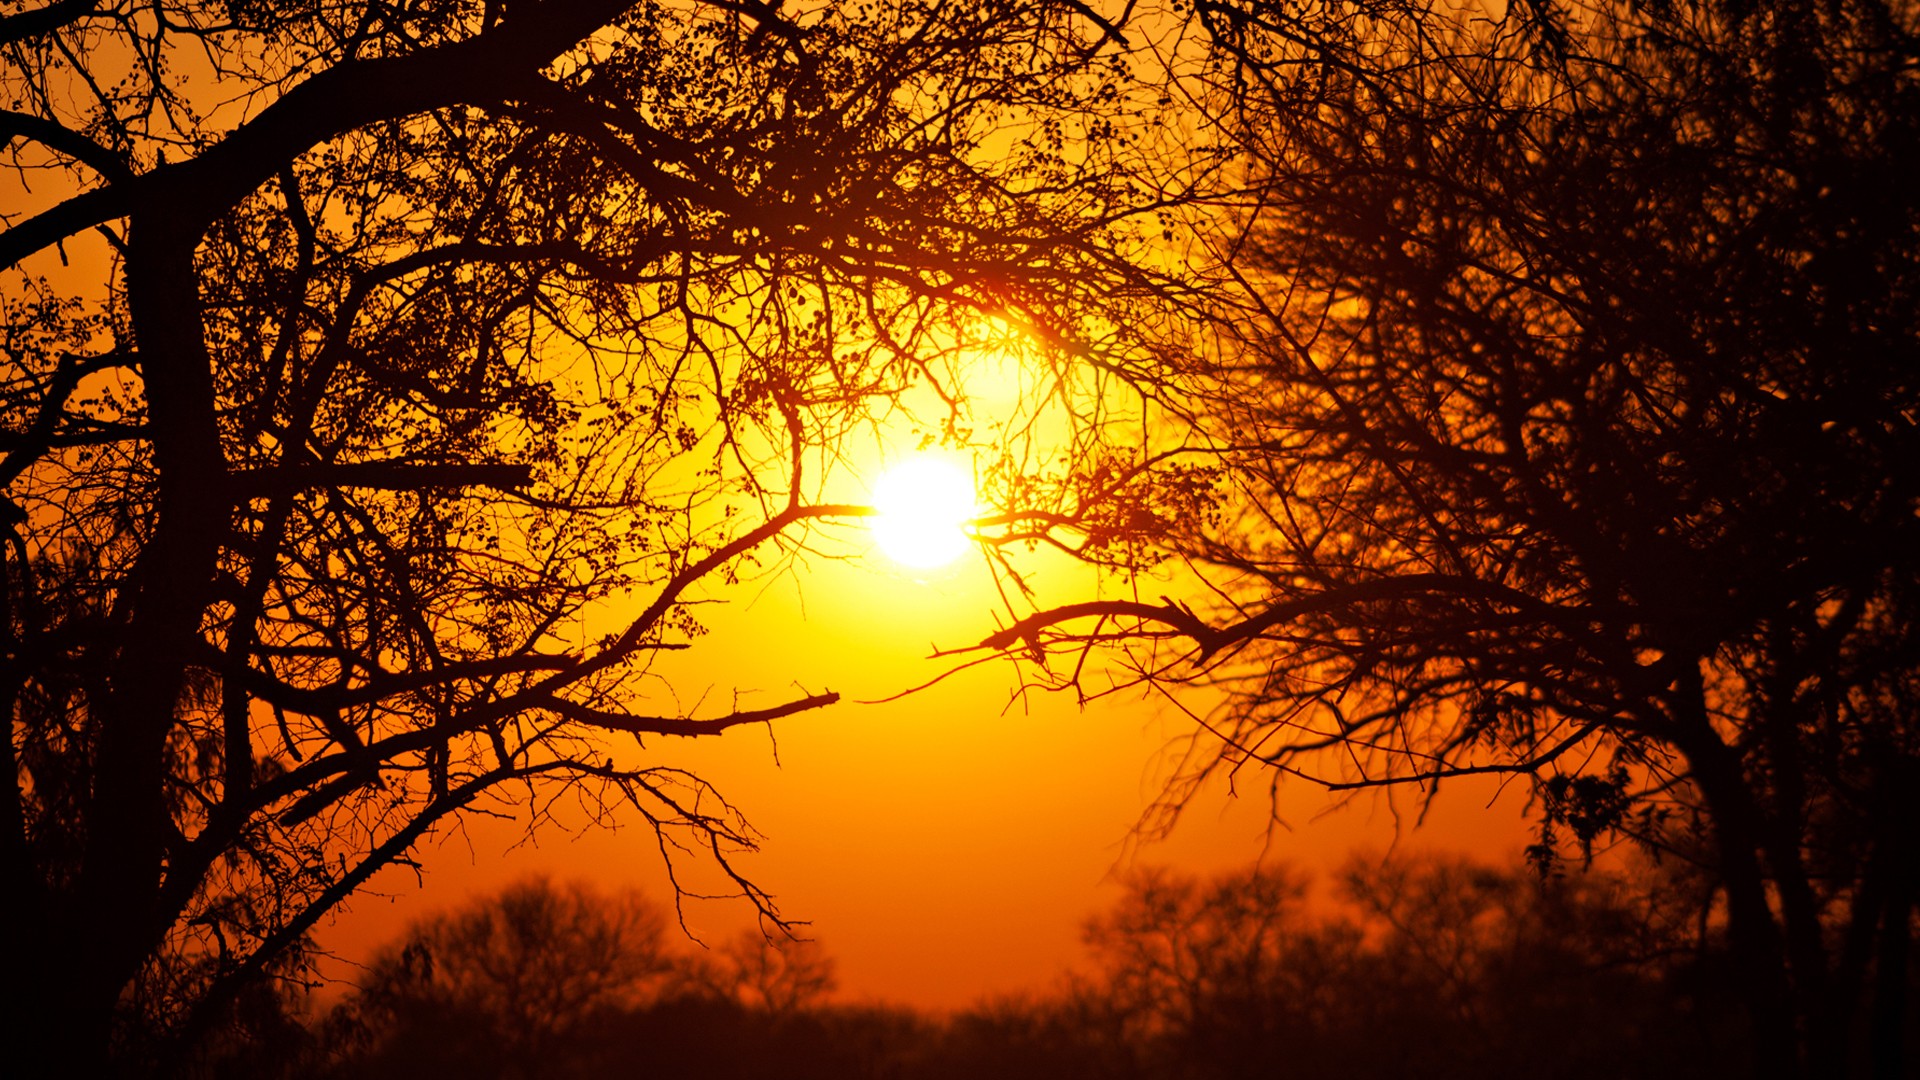 General 1920x1080 South Africa nature national park Sun trees orange sunlight orange sky outdoors silhouette